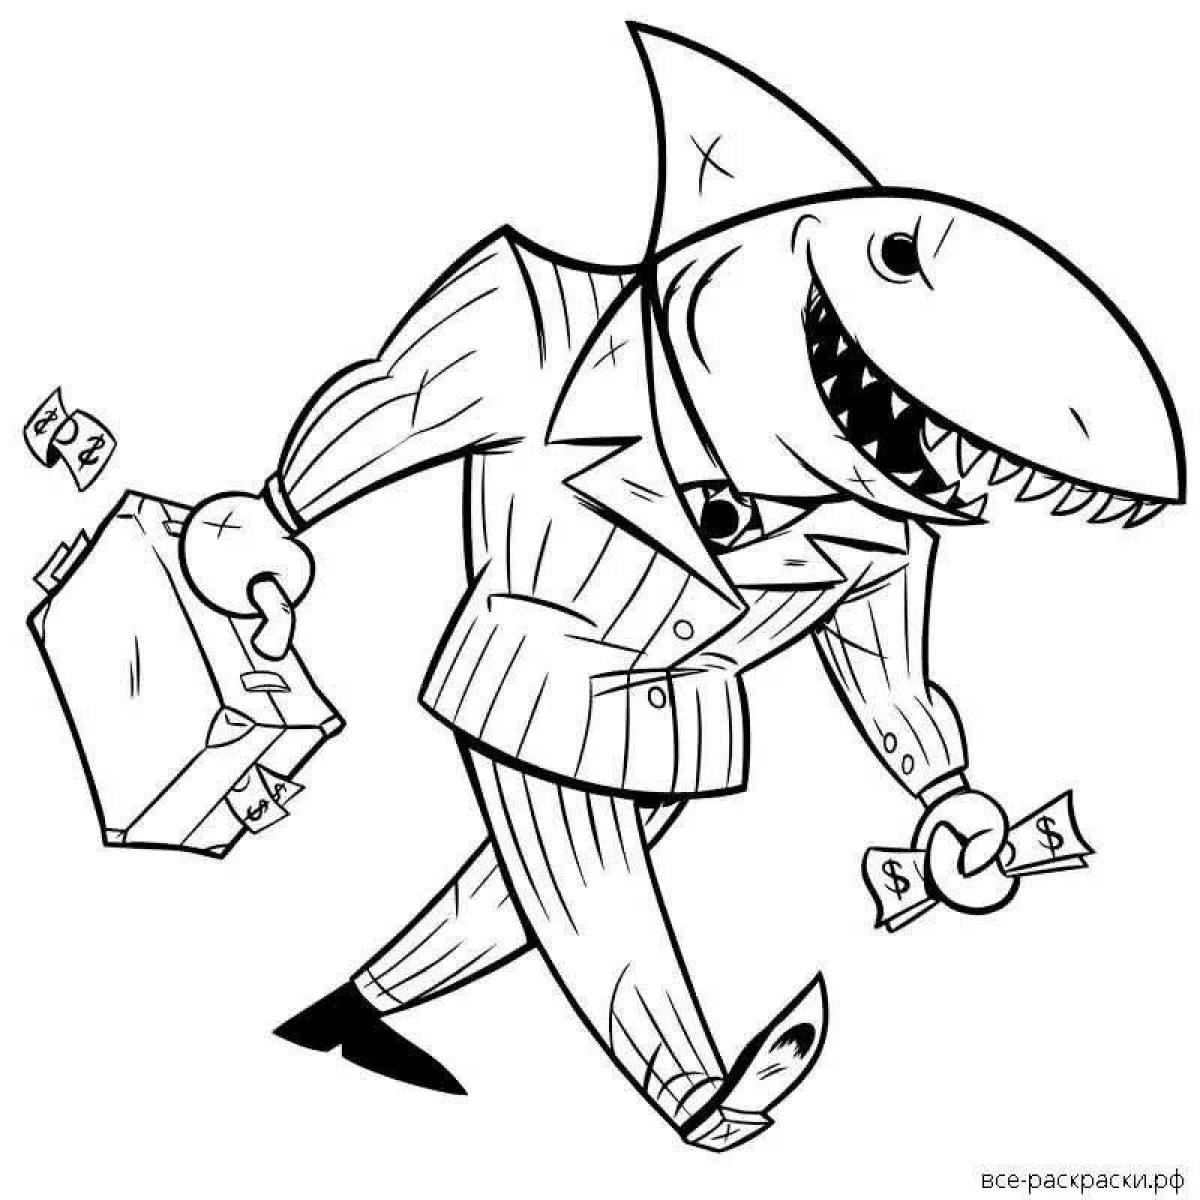 Leon shark fun coloring book